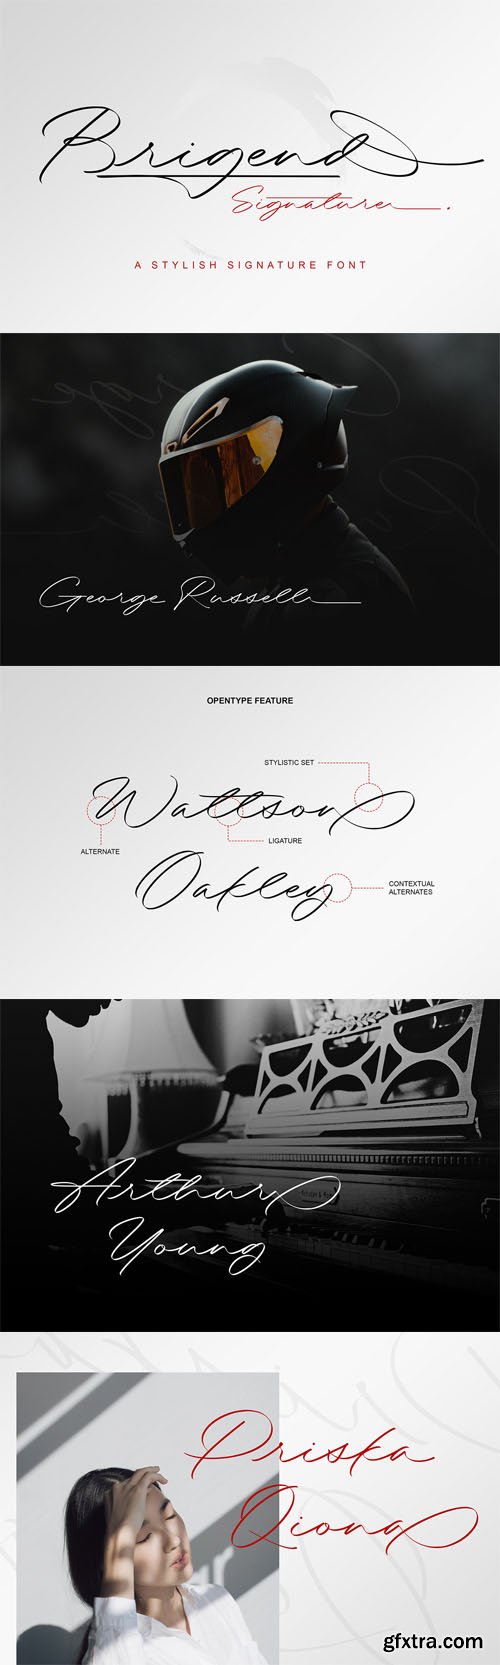 Brigend - Stylish Signature Font